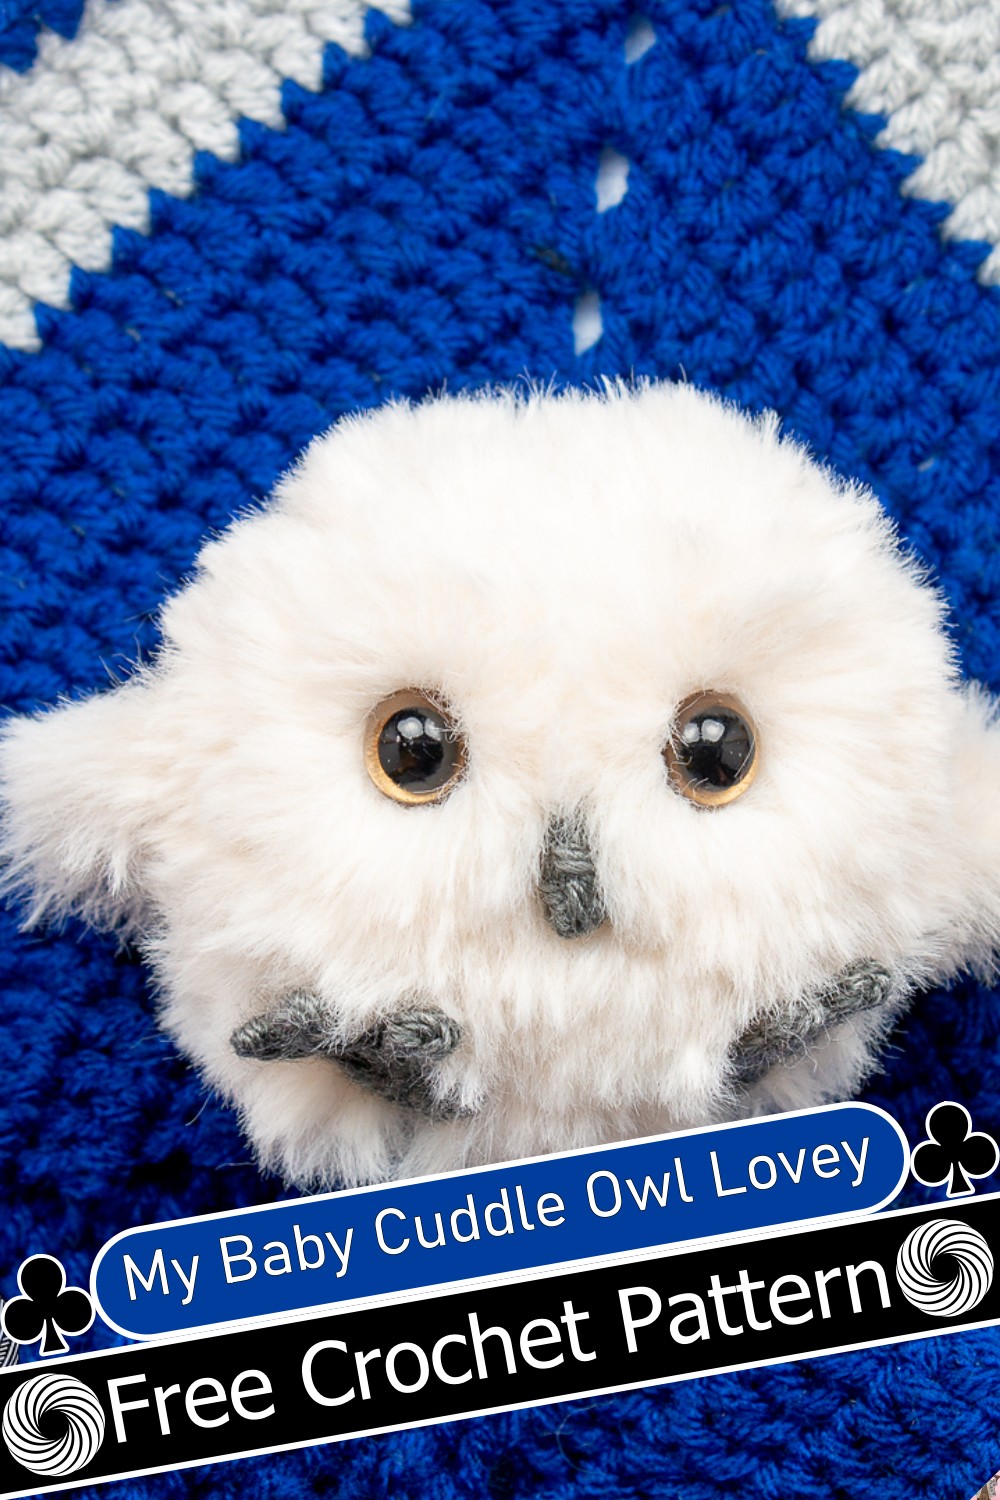 My Baby Cuddle Owl Lovey